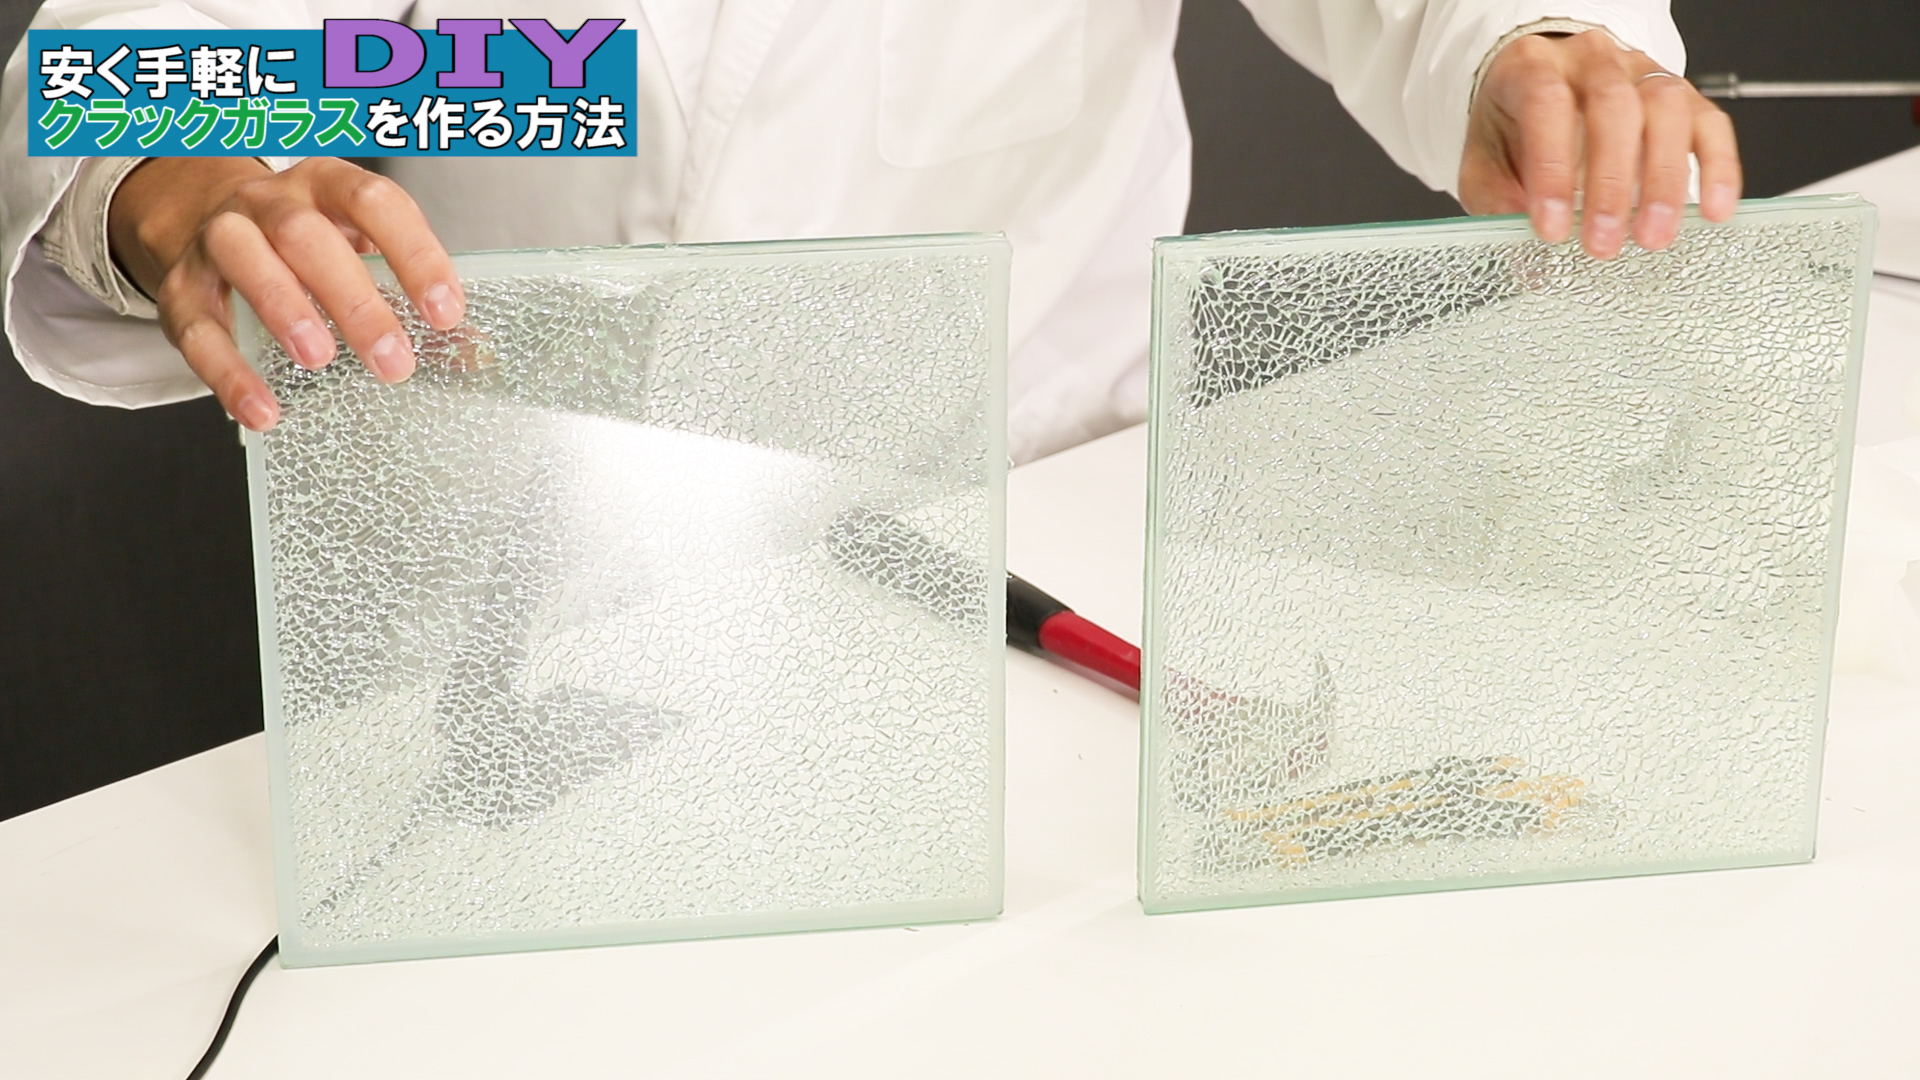 Diyシリーズ 安く手軽にクラックガラスを作る方法 Kg Press ガラス情報発信メディア